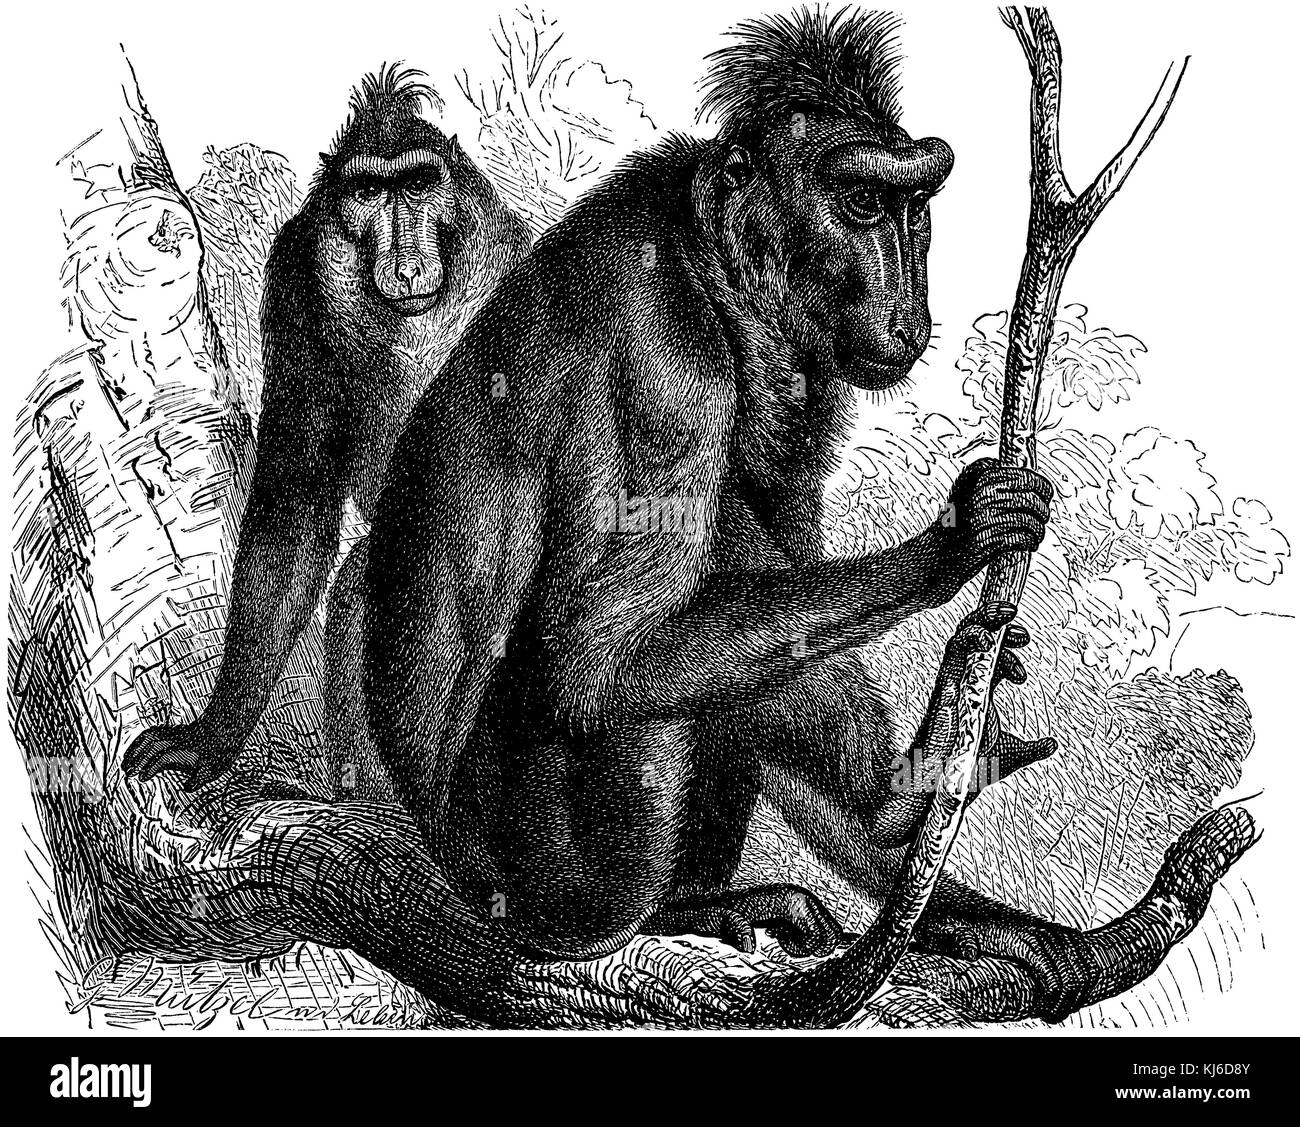 Celebes macaque crestato, macaque nero crestato Sulawesi o la scimmia nera (Schopfaffe oder Schopfmakak <Macaca nigra>) Foto Stock